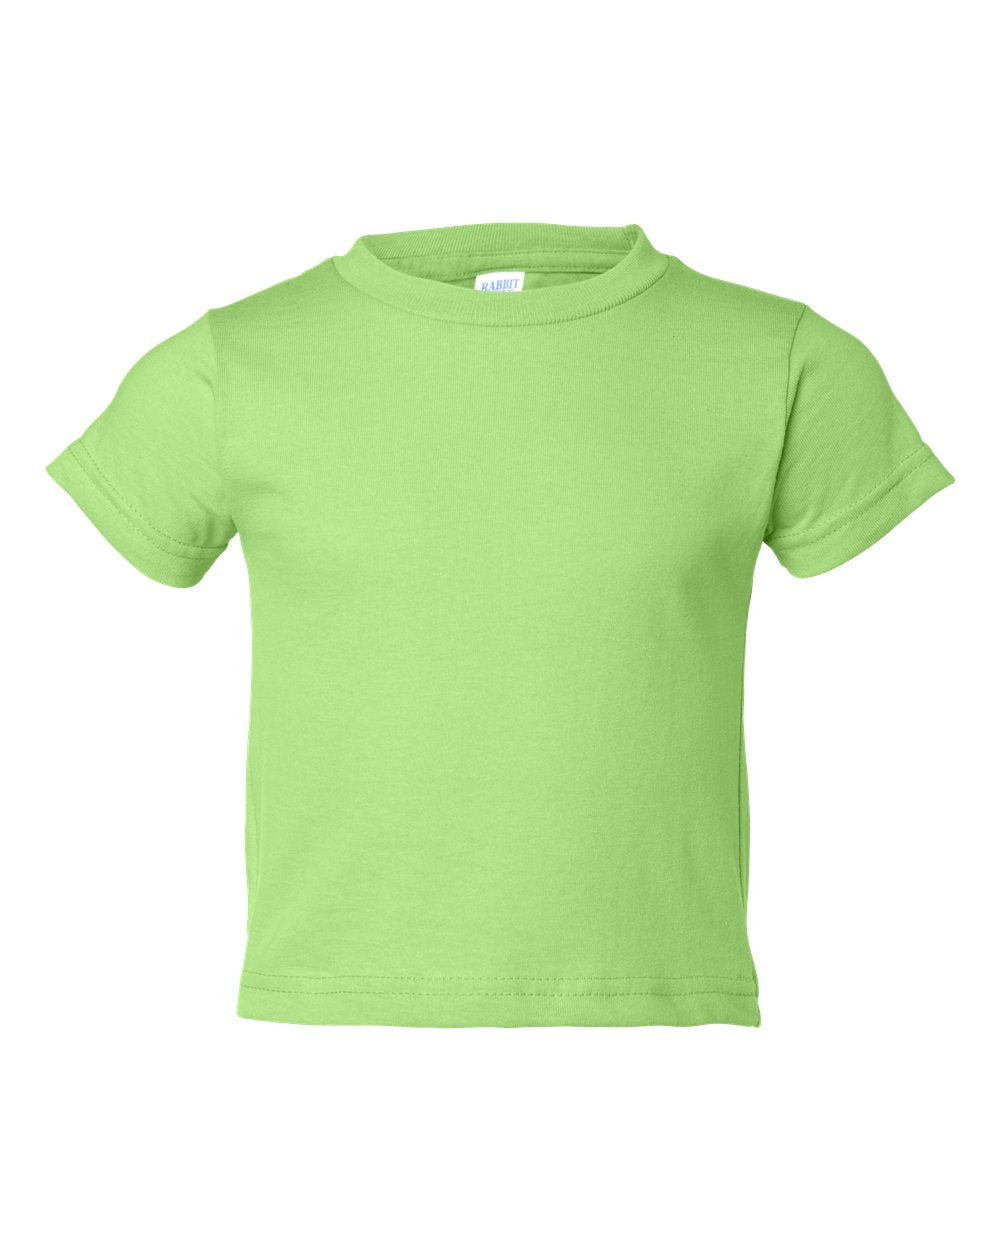 Toddler Jersey T-shirt, 100% Cotton, Key Lime